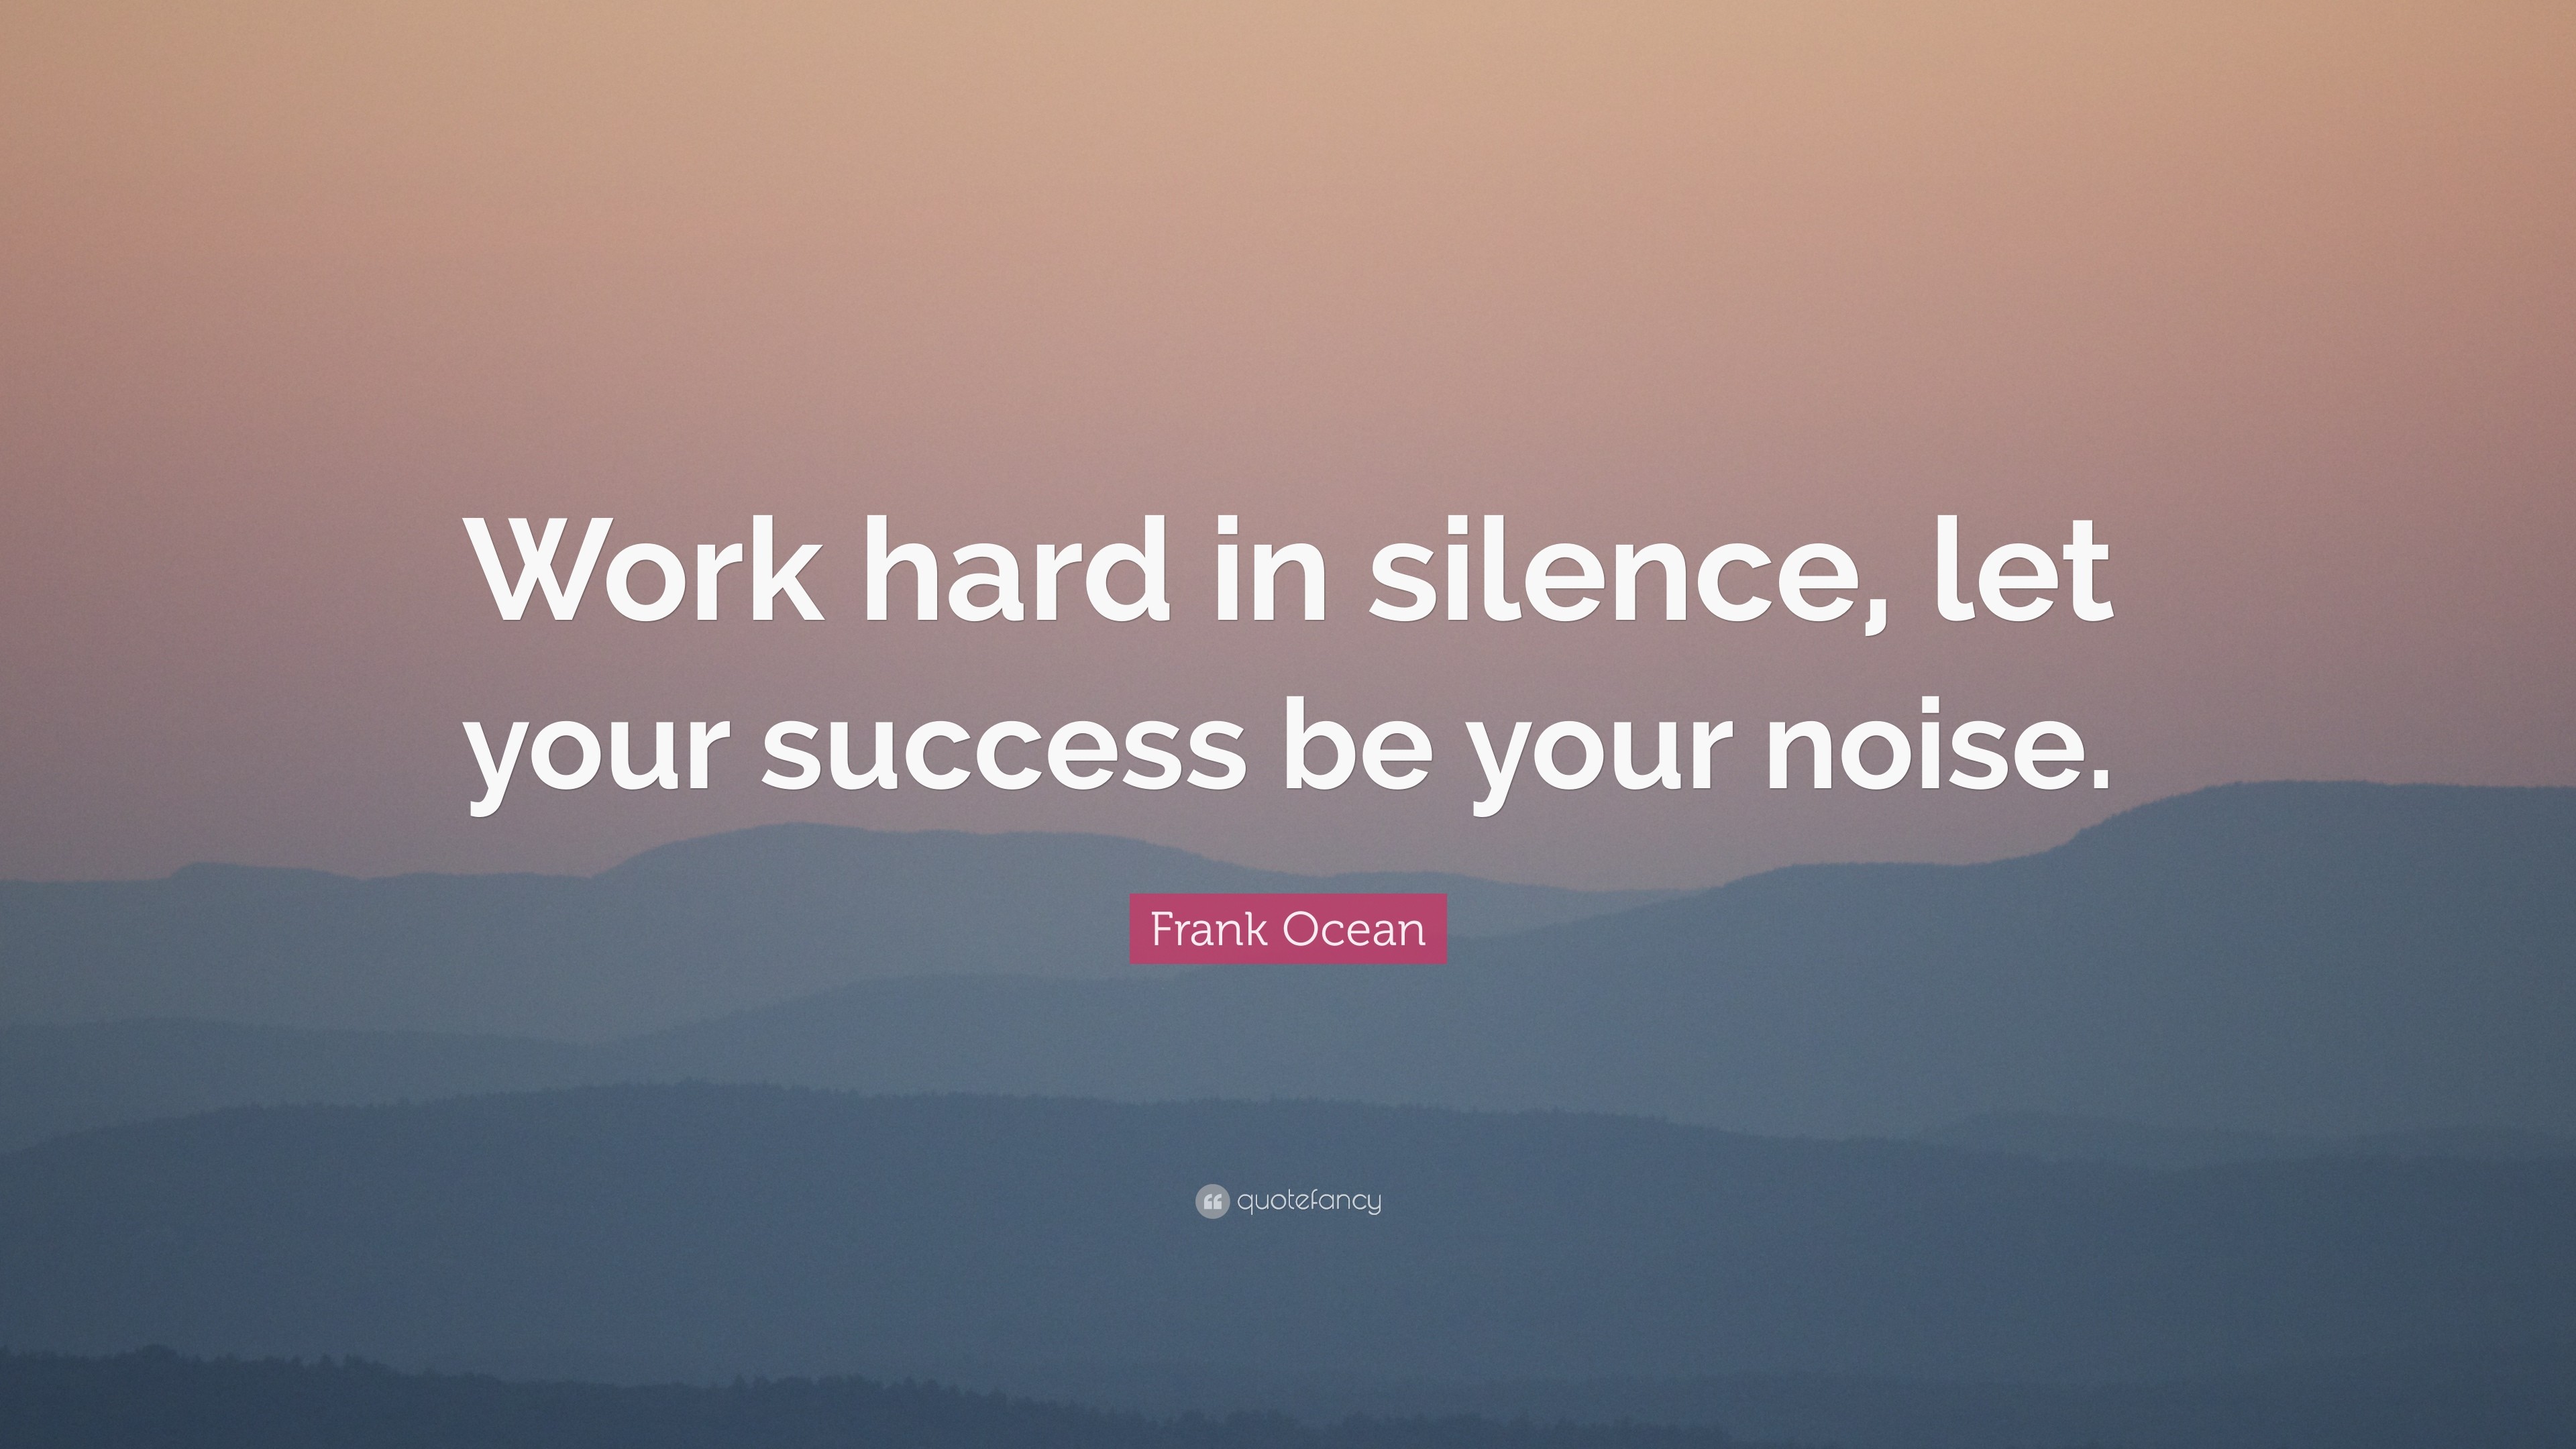 3840x2160 Music Quotes (40 wallpapers) - Quotefancy Frank Ocean Quote: “Work hard ...